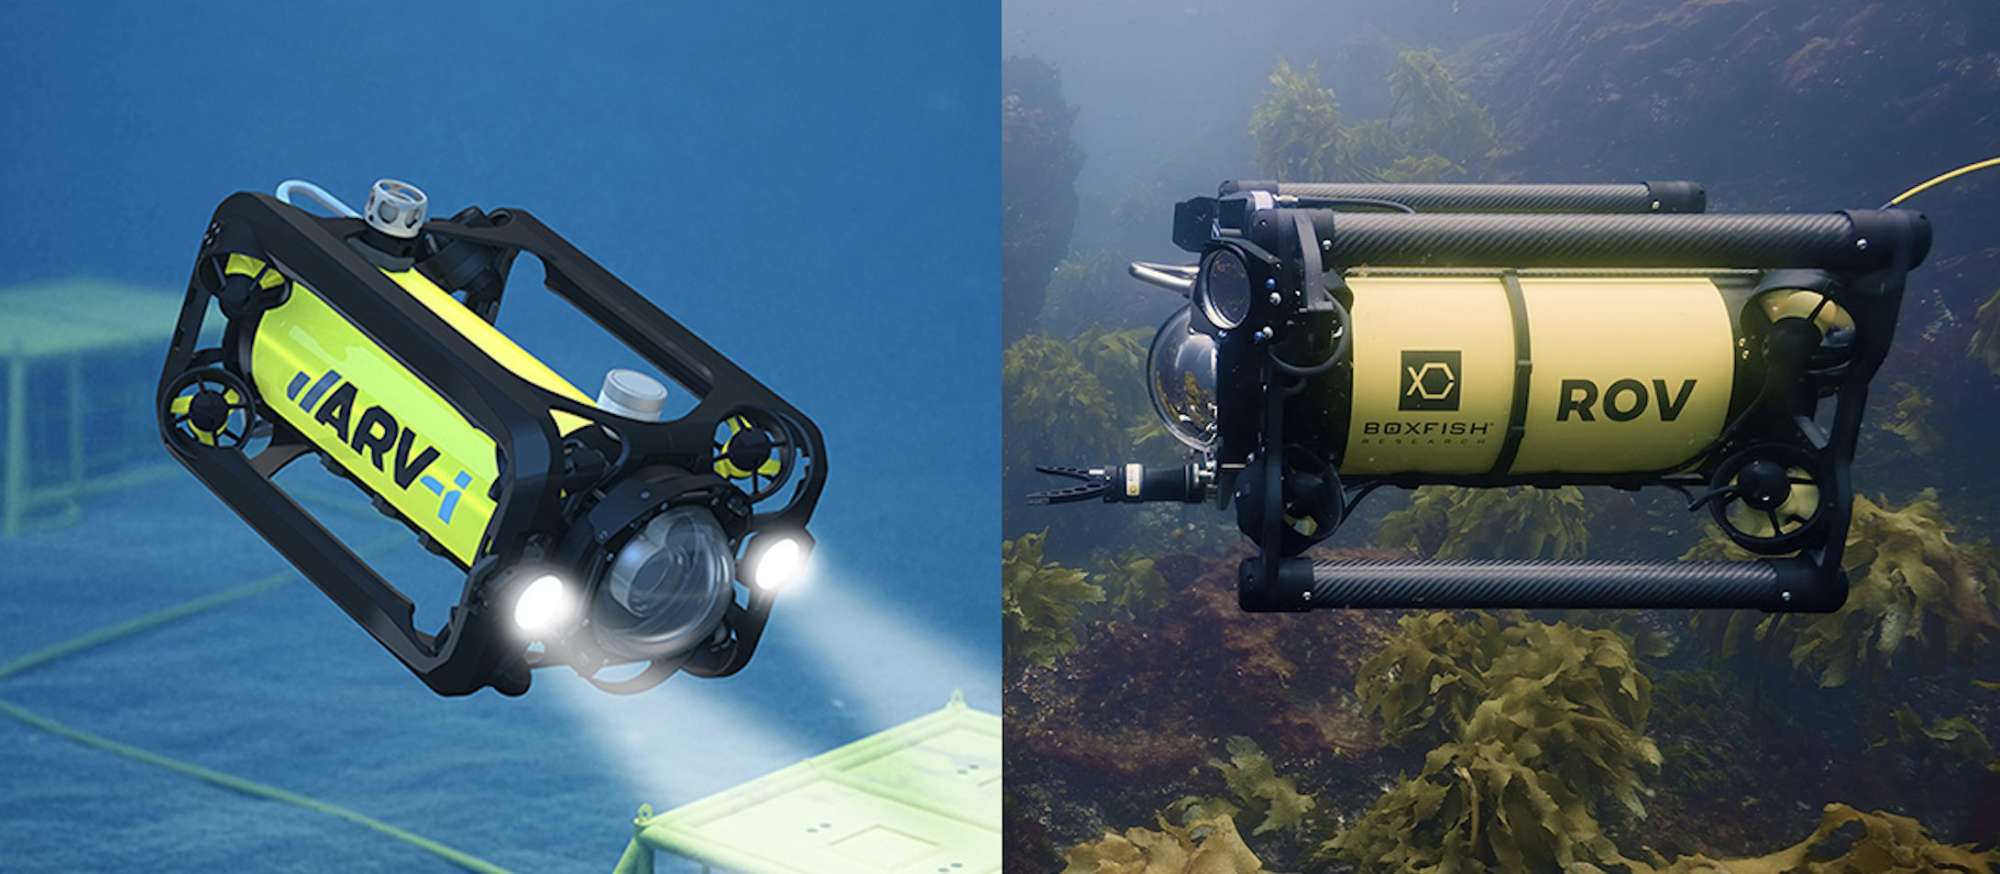 Boxfish HAUV and ROV on one image underwater 